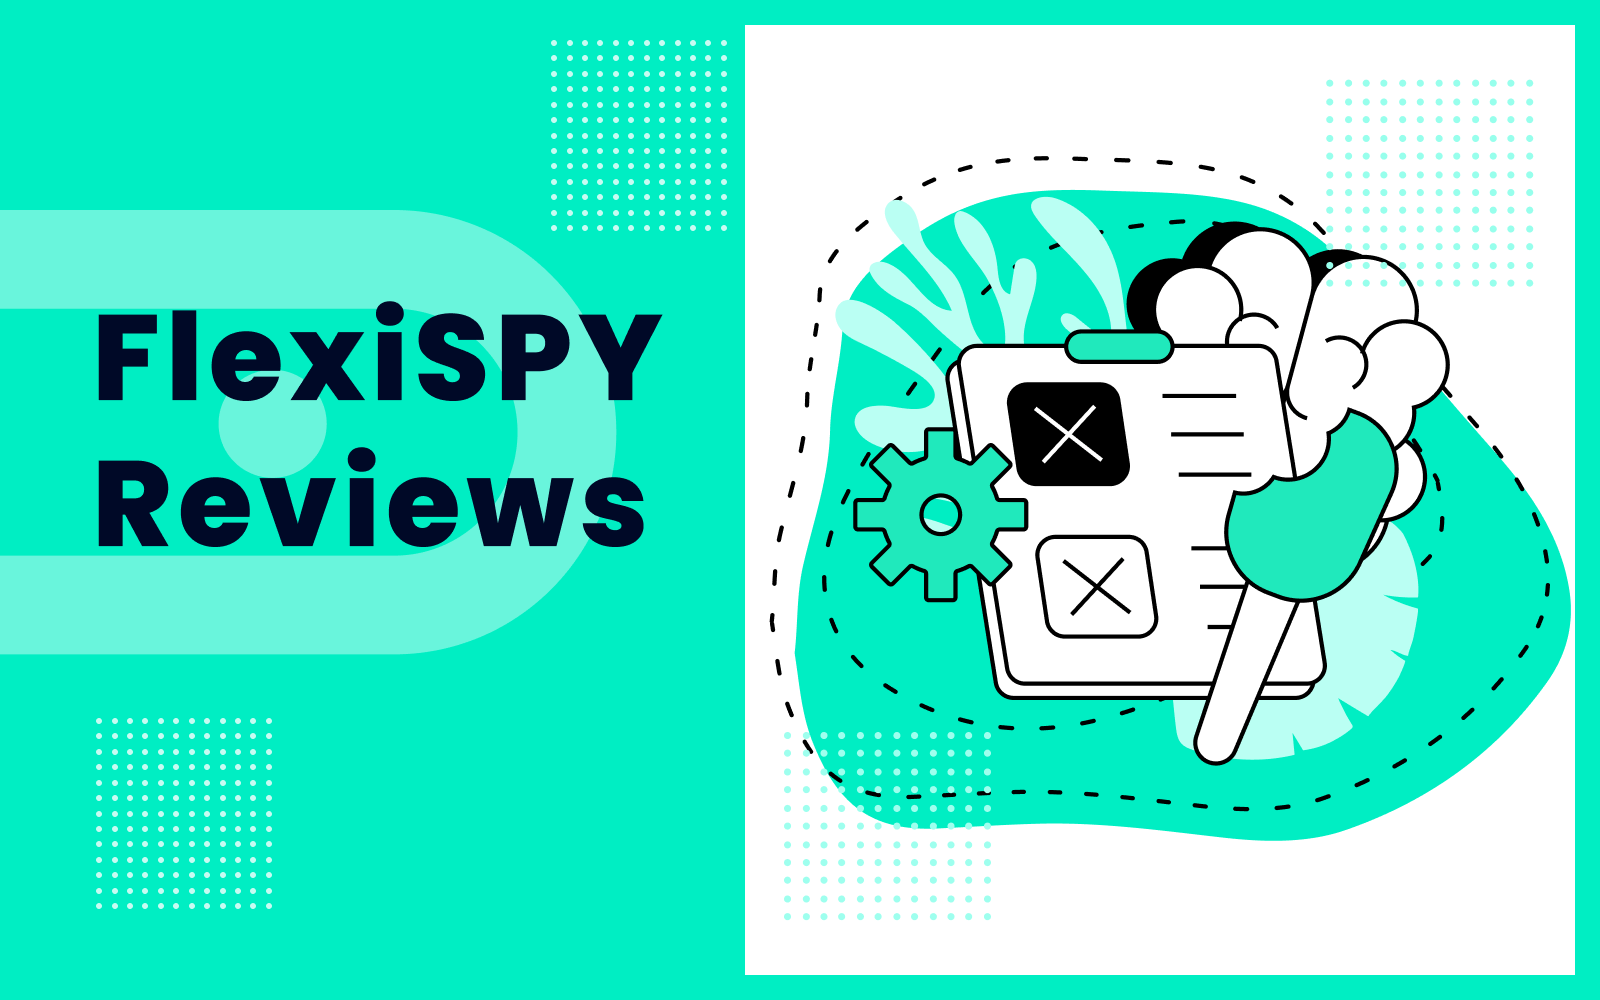 
FlexiSpy Reviews 2022: Does It Work? Is It a Scam?
